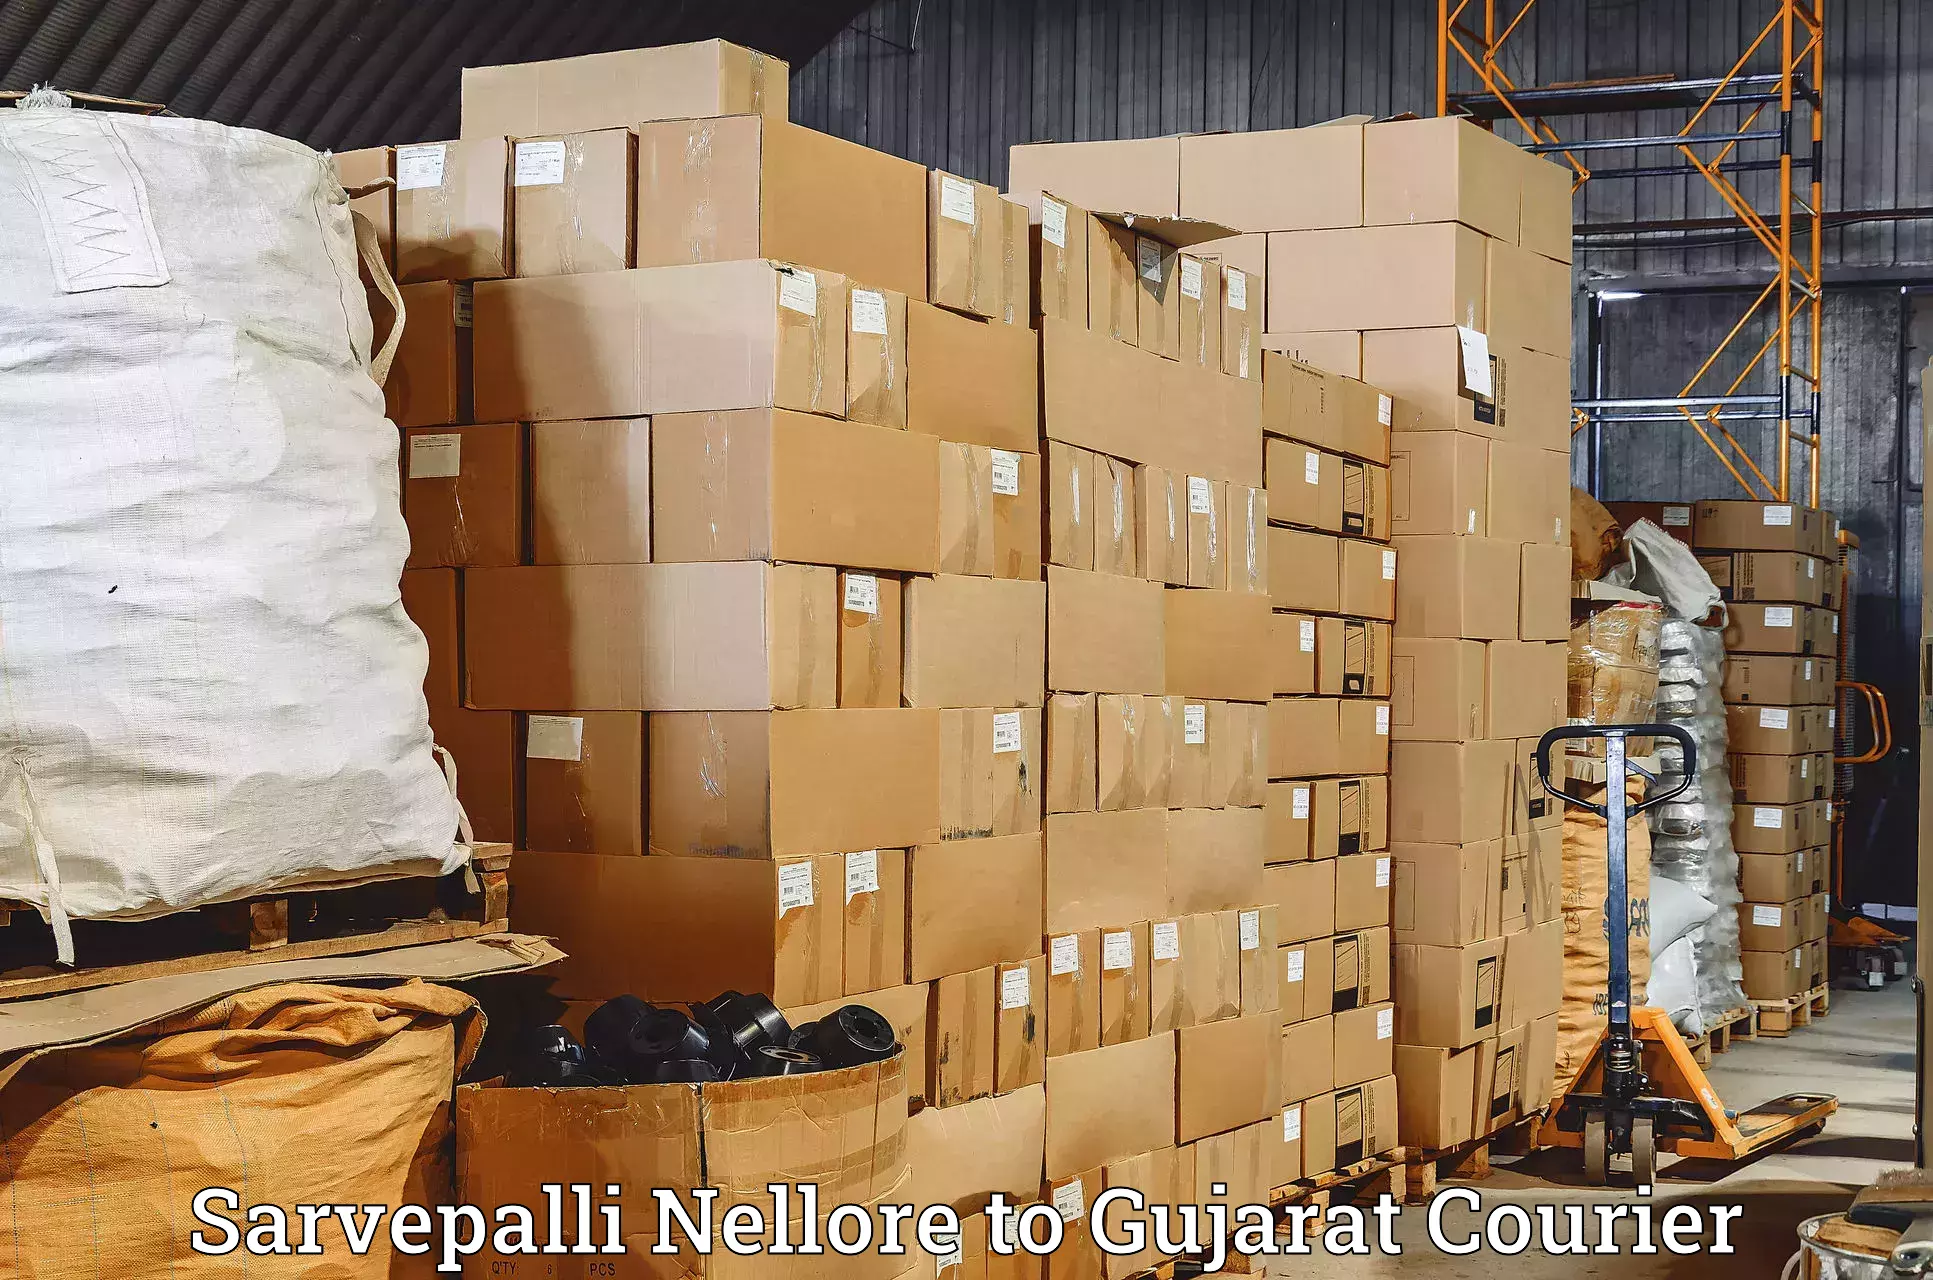 Courier service partnerships Sarvepalli Nellore to Jamjodhpur